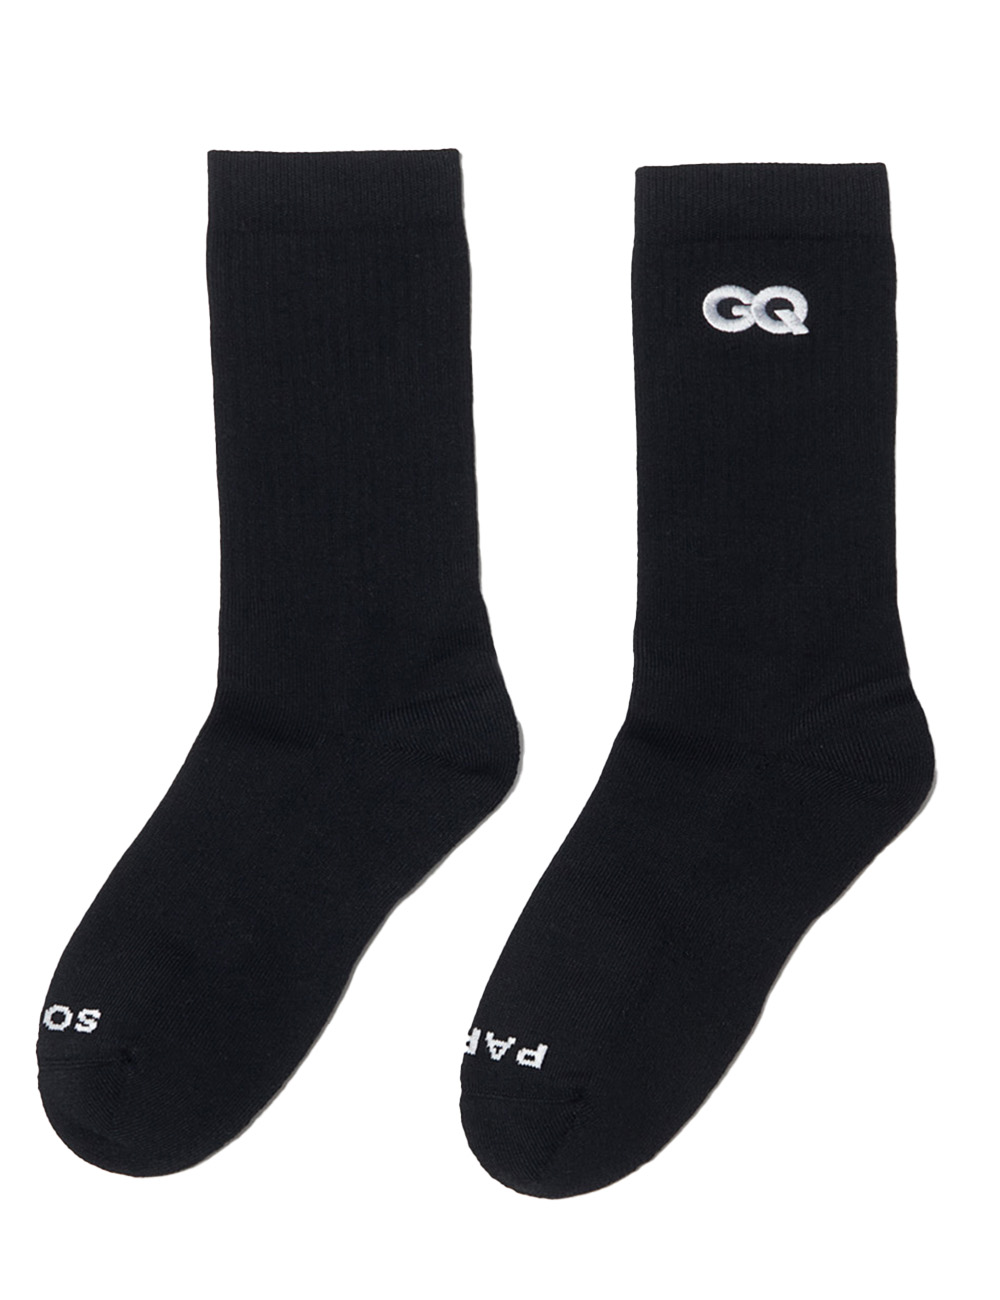 GQ Party-Socken, Schwarz Gr. M